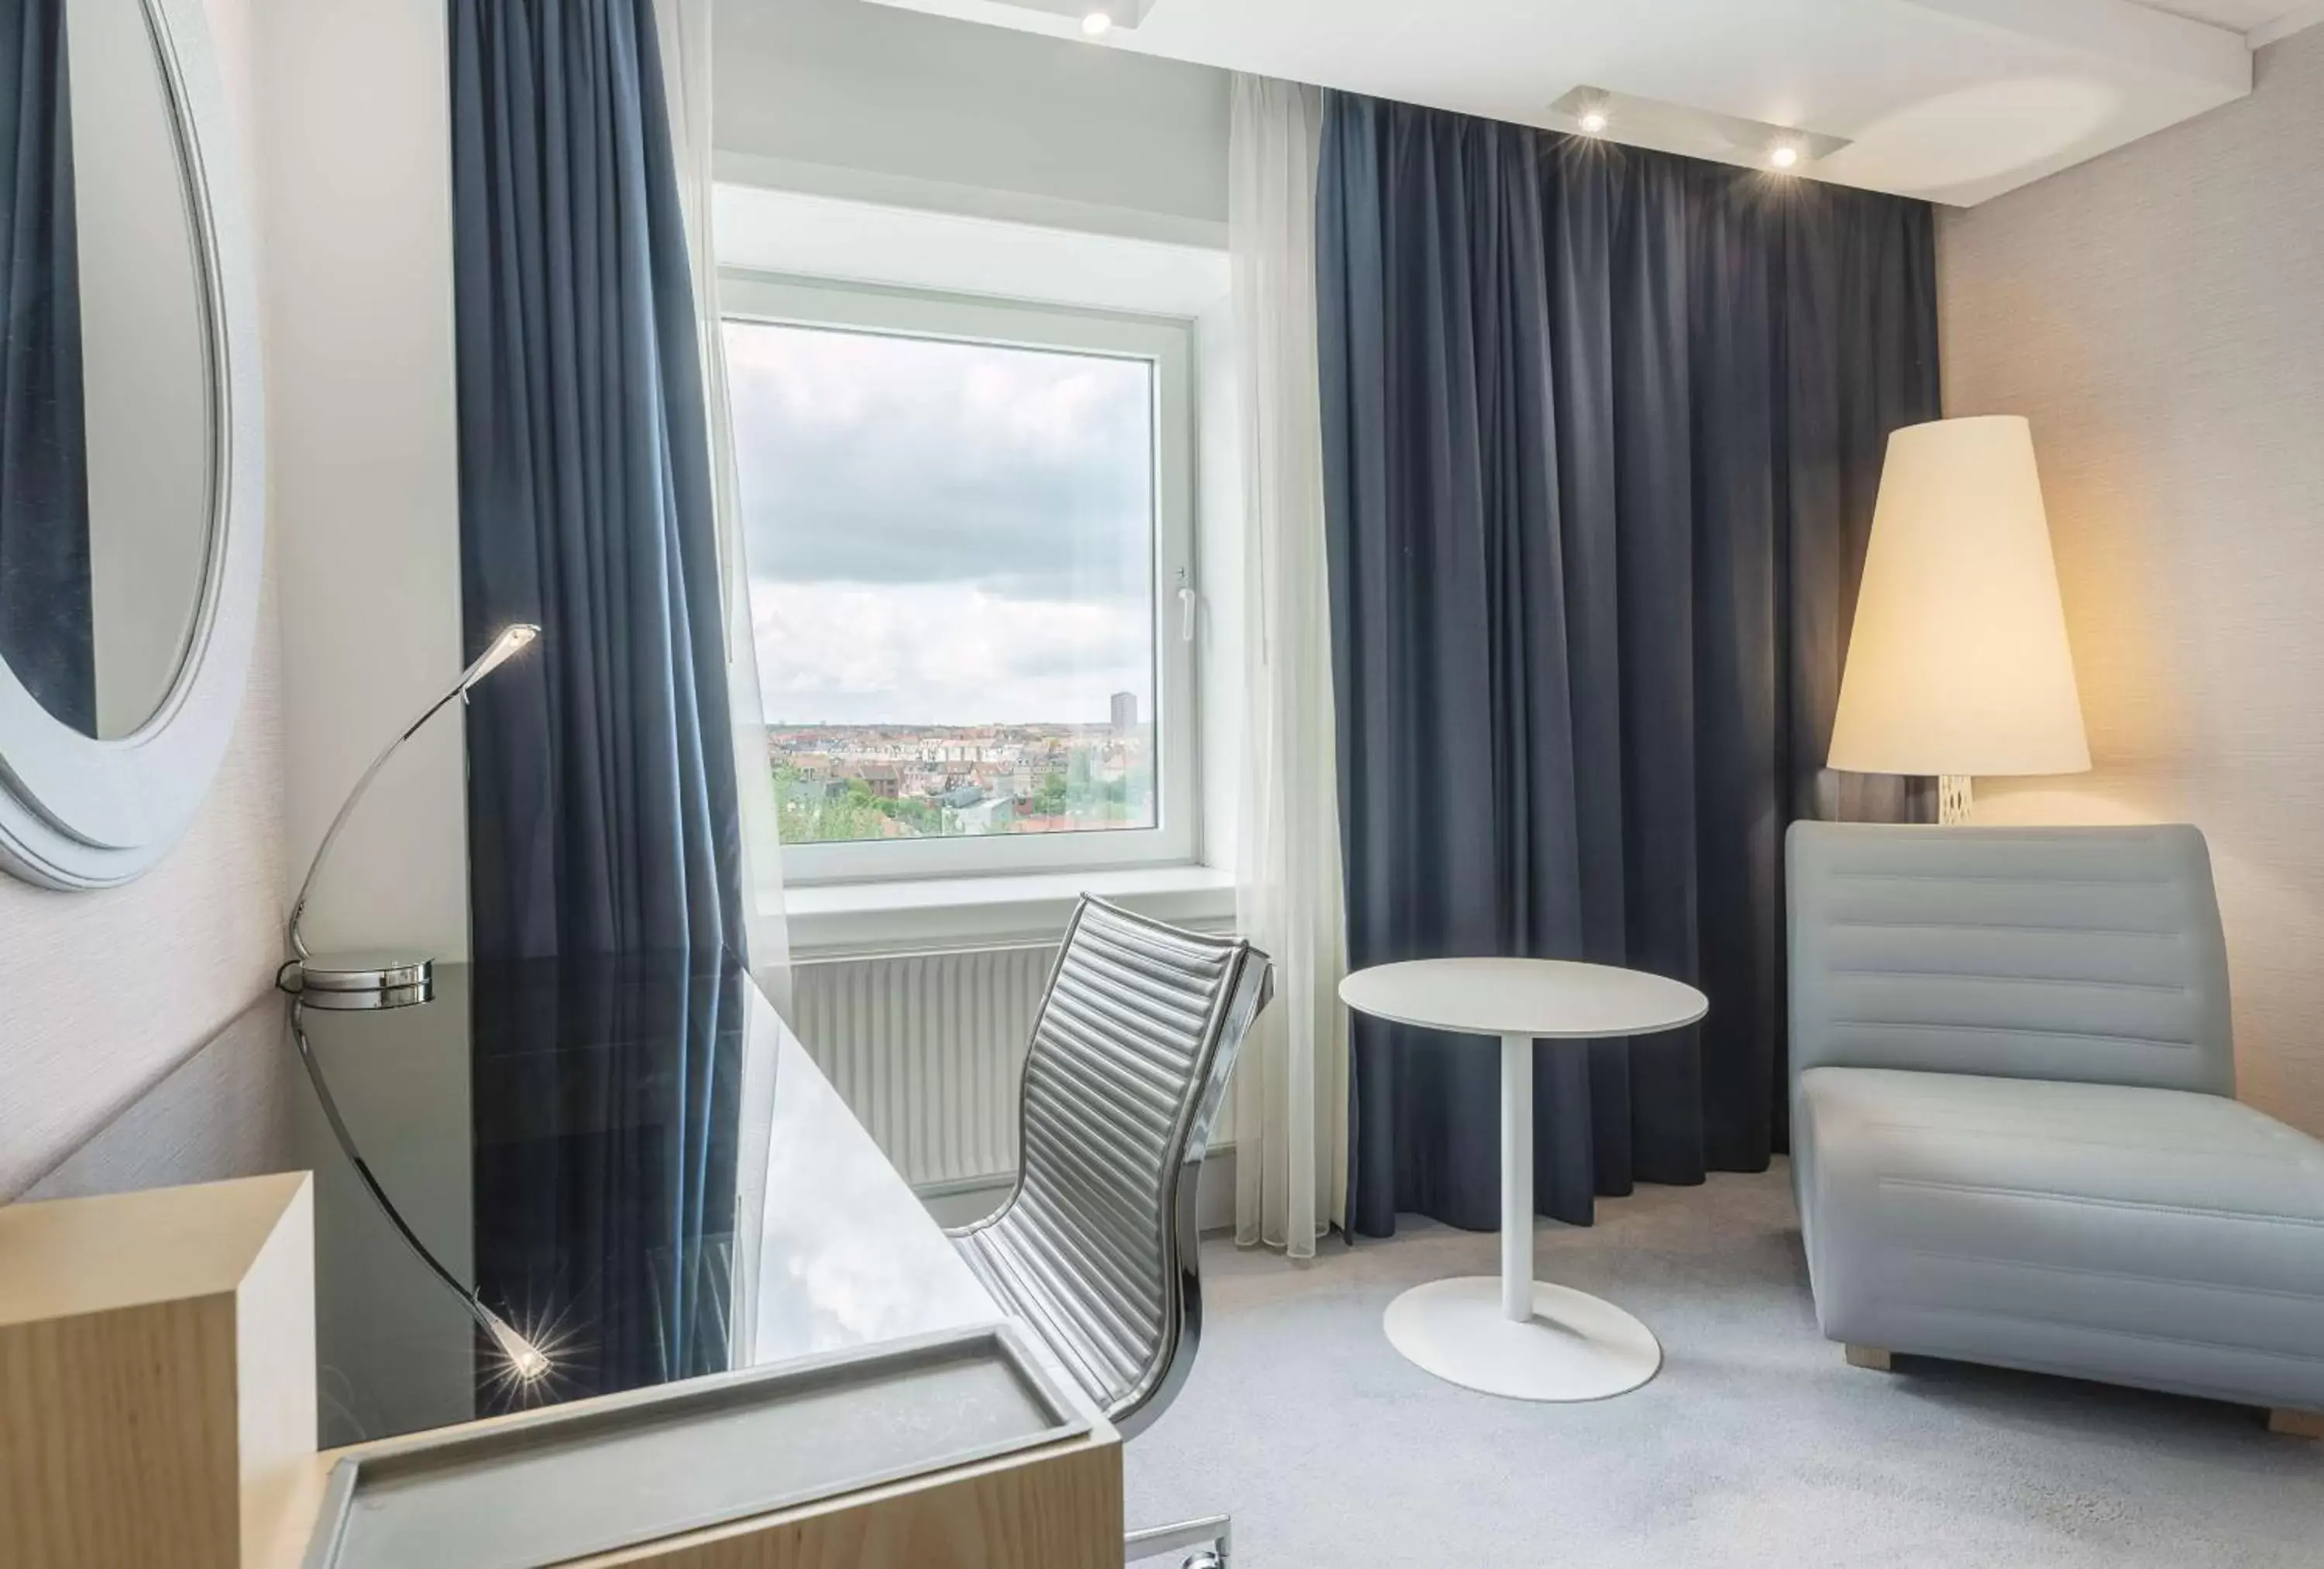 View (from property/room) in Radisson Blu Scandinavia Hotel Aarhus